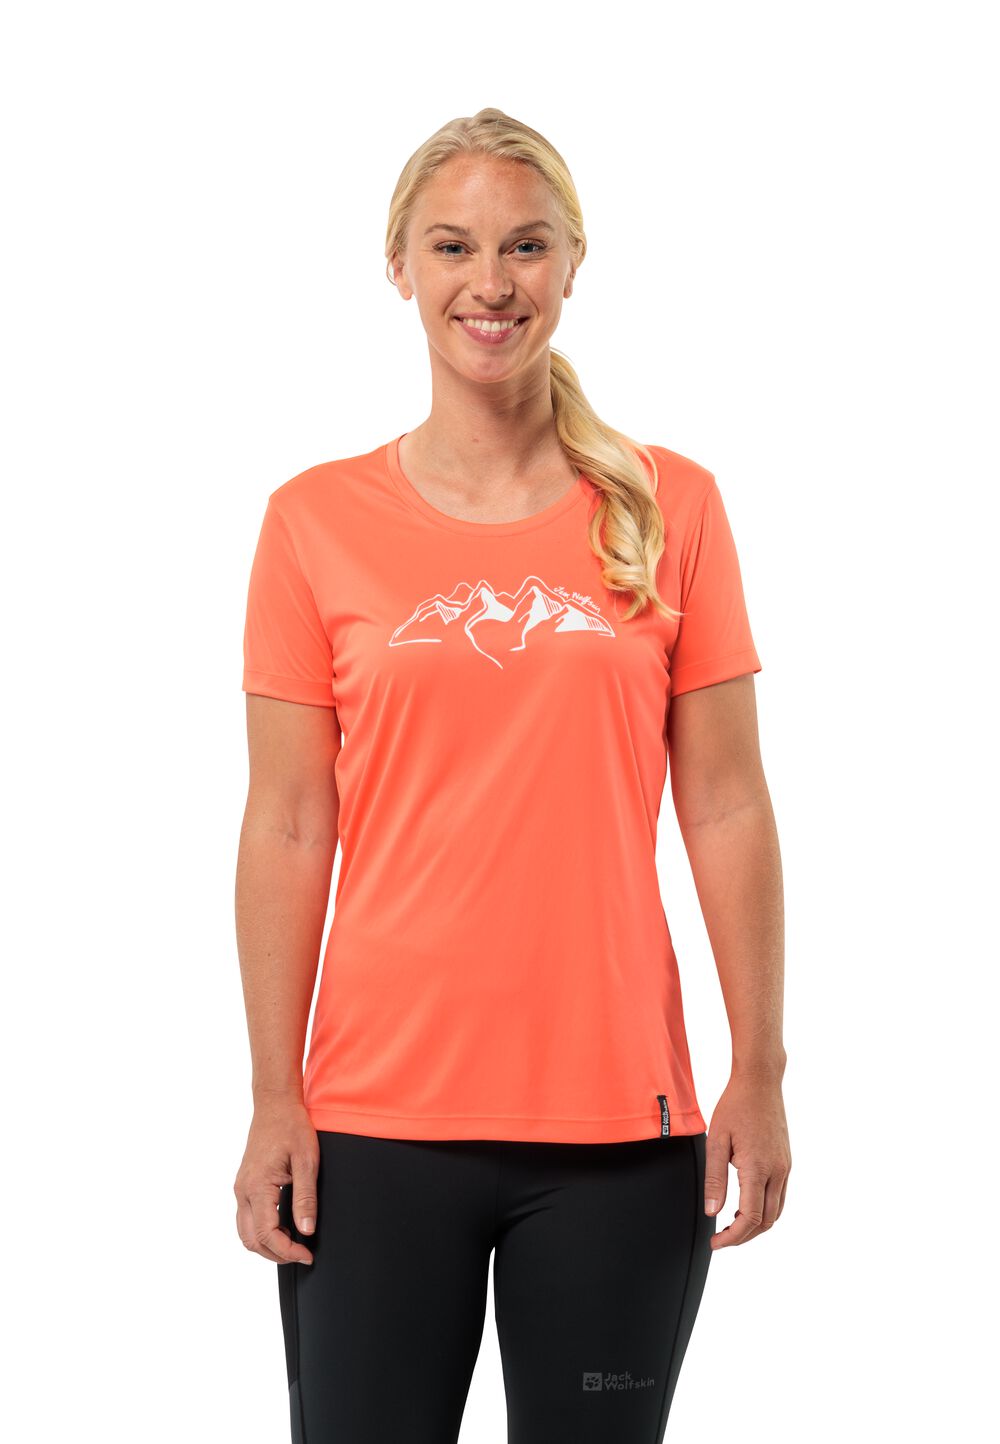 Jack Wolfskin Peak Graphic T-Shirt Women Functioneel shirt Dames S rood digital orange